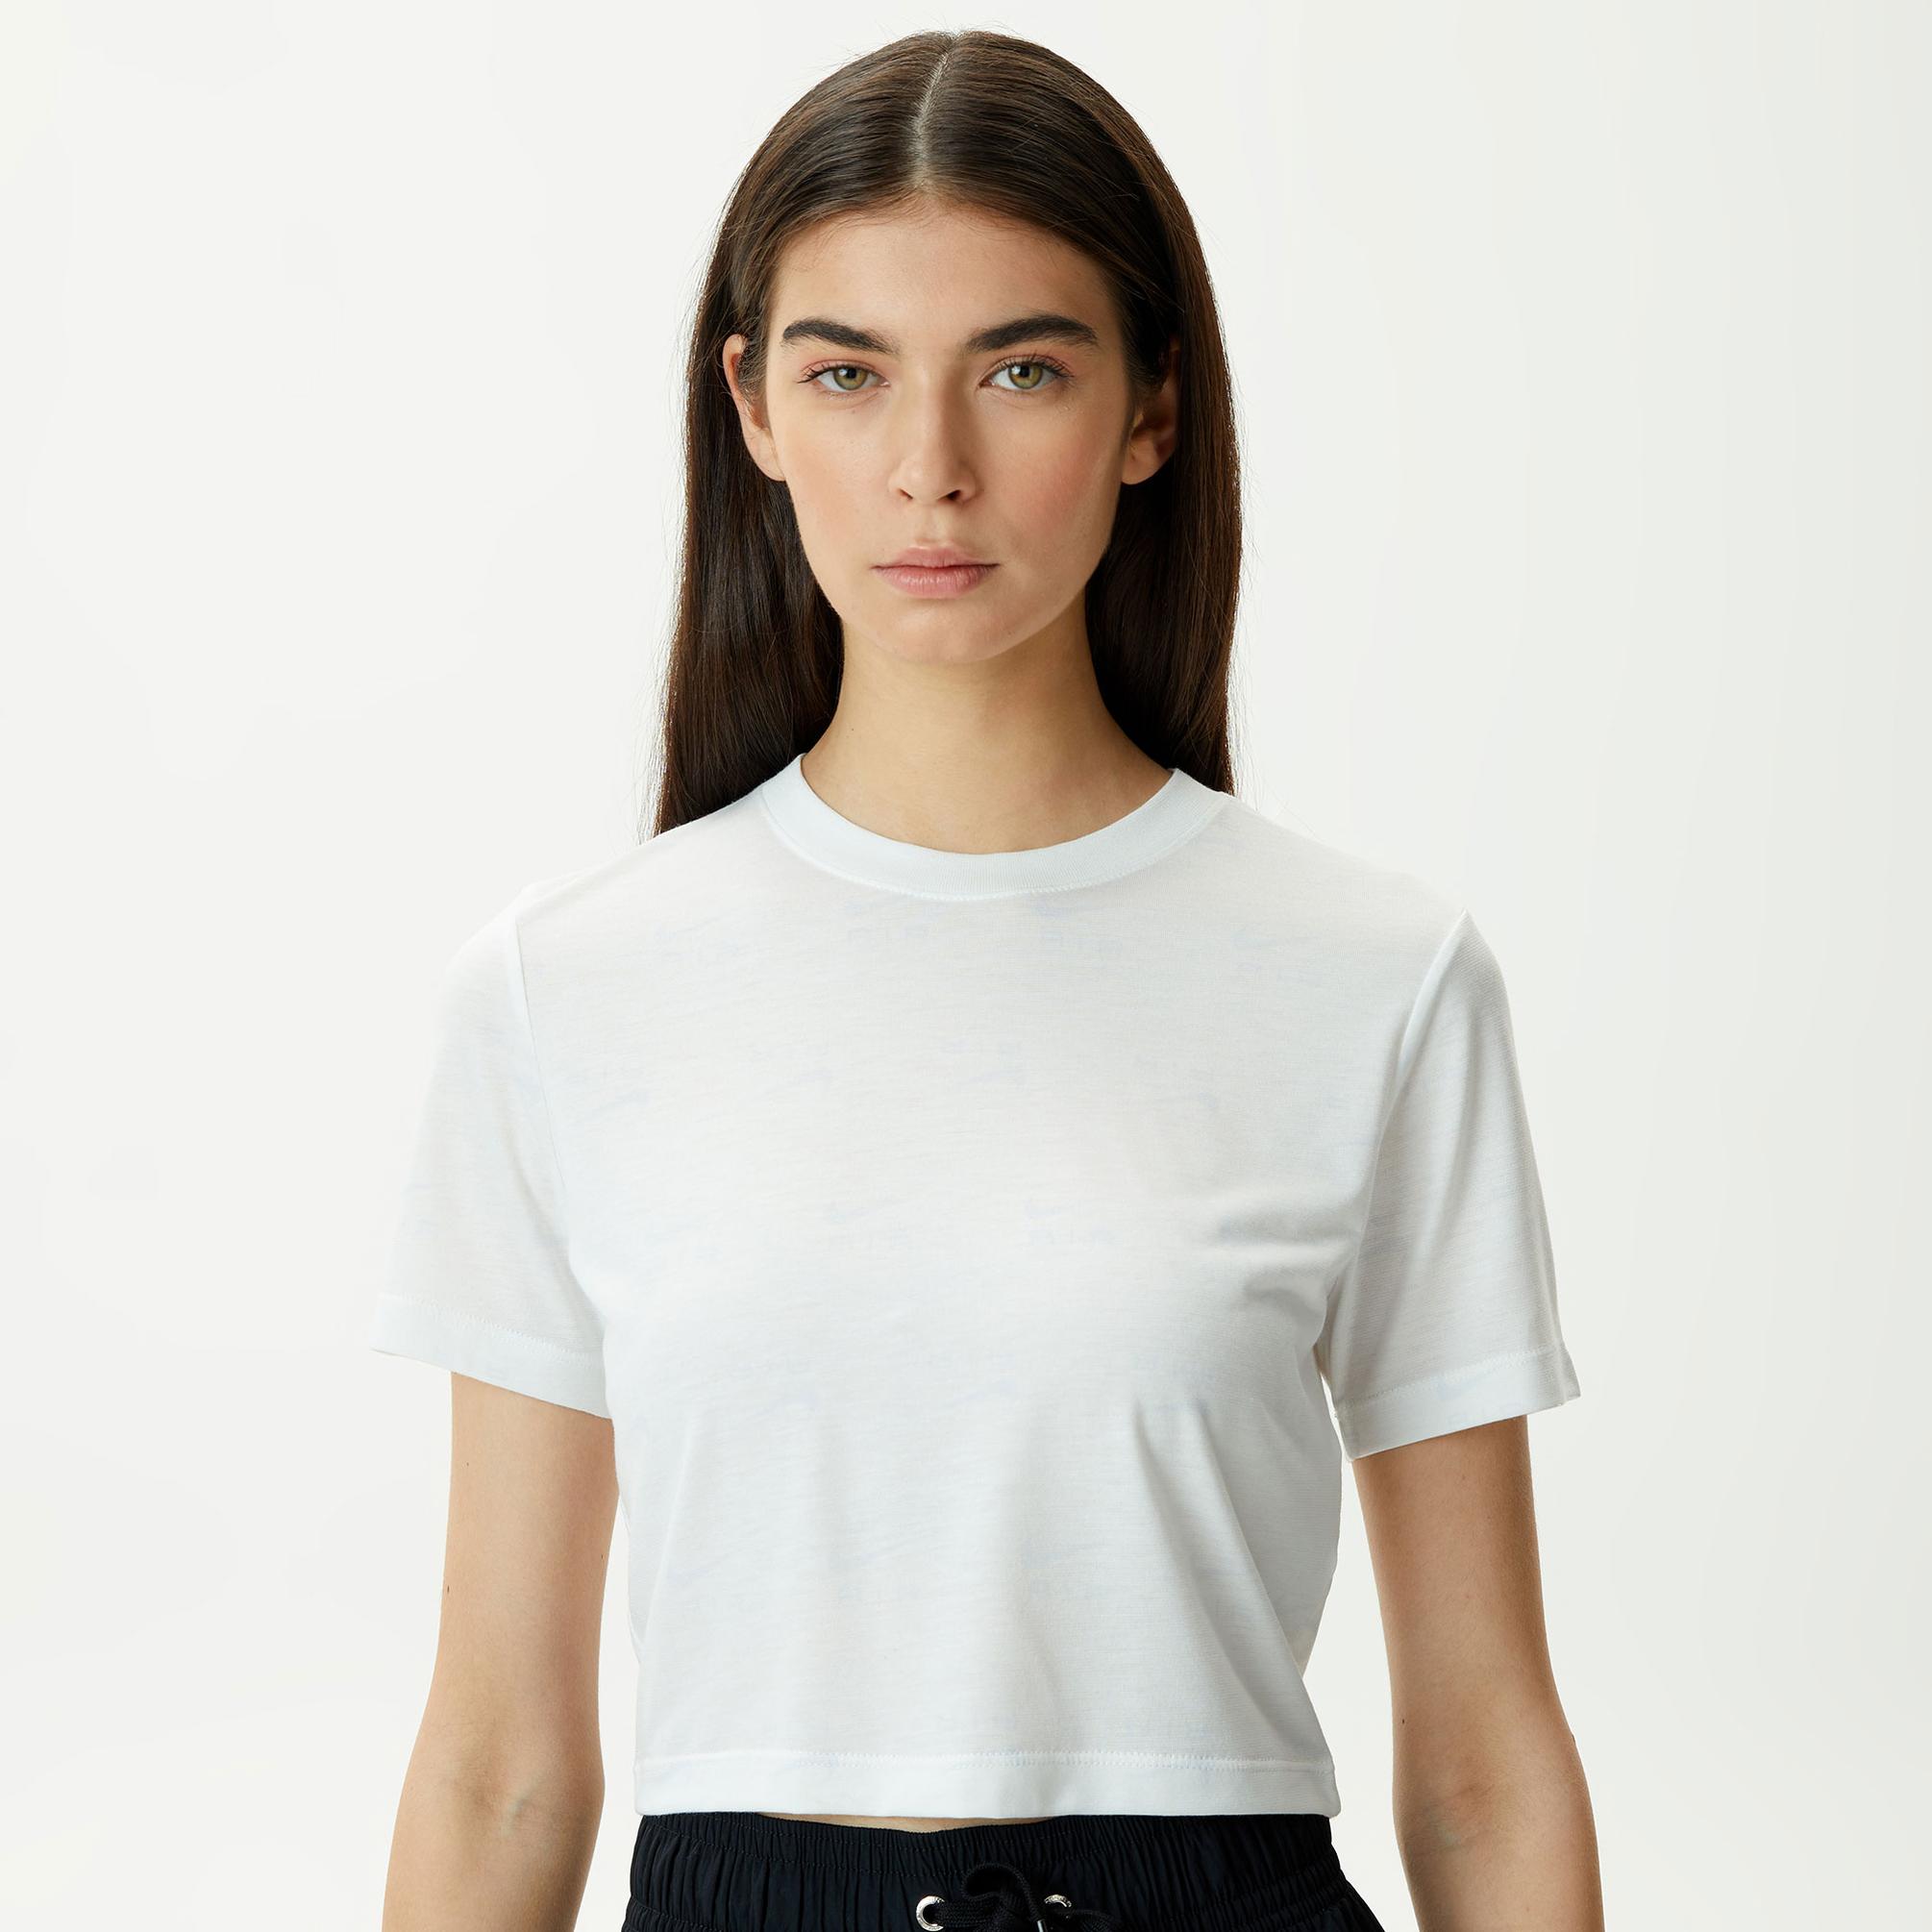  Nike Sportswear Air Slim Crp Kadın Krem T-Shirt